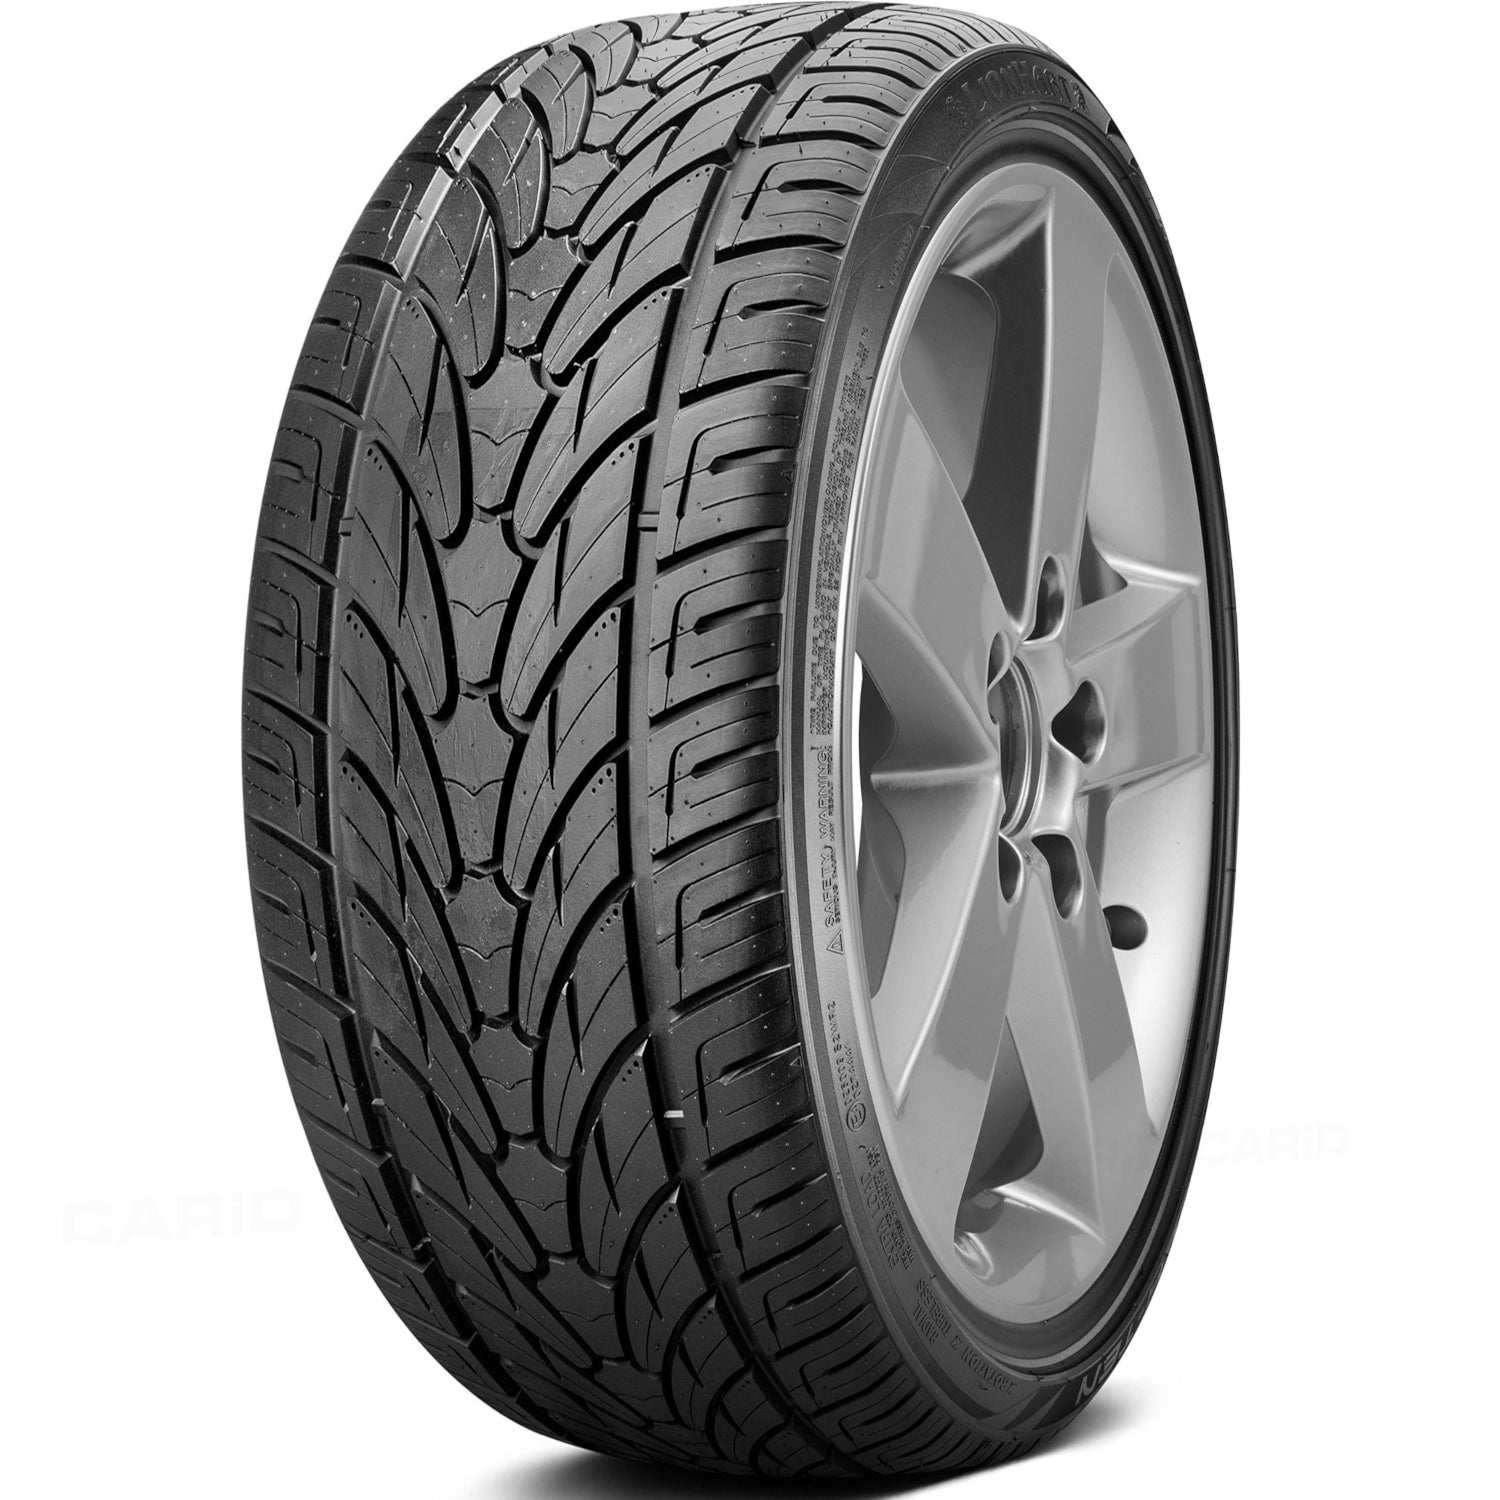 LIONHART LH-TEN 275/25ZR24 (29.4X10.8R 24) Tires